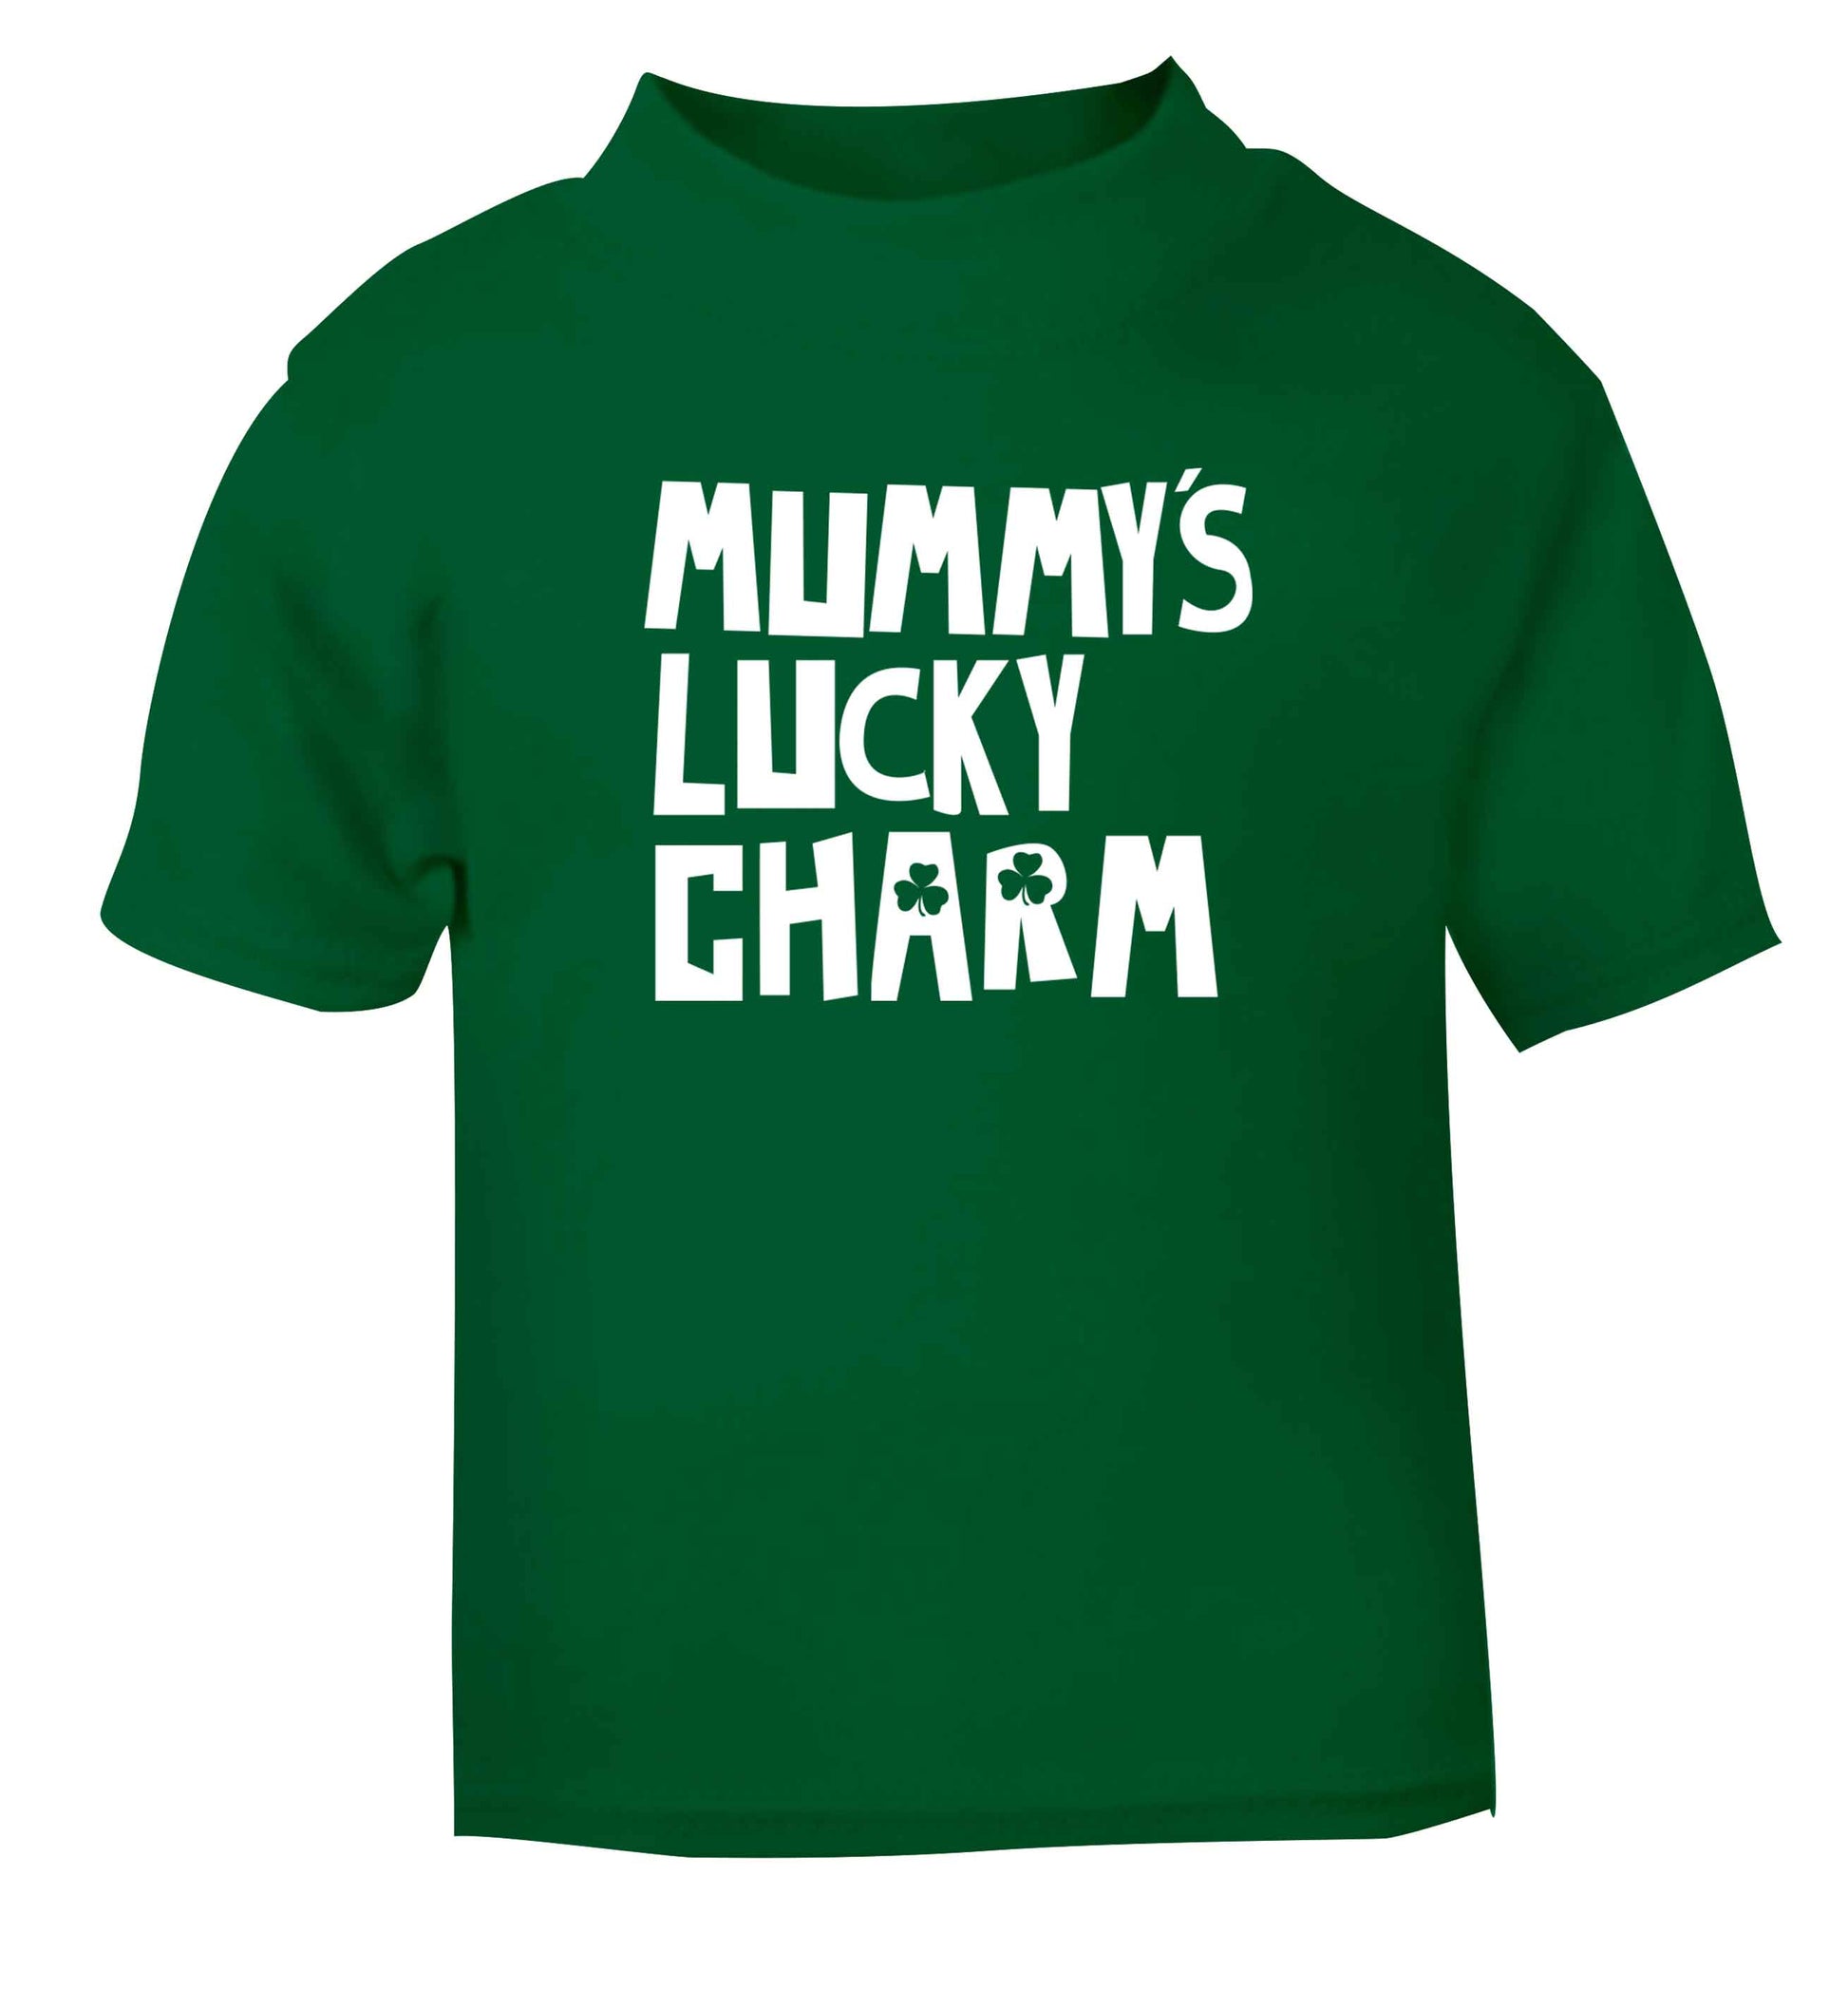 Mummy's lucky charm green baby toddler Tshirt 2 Years